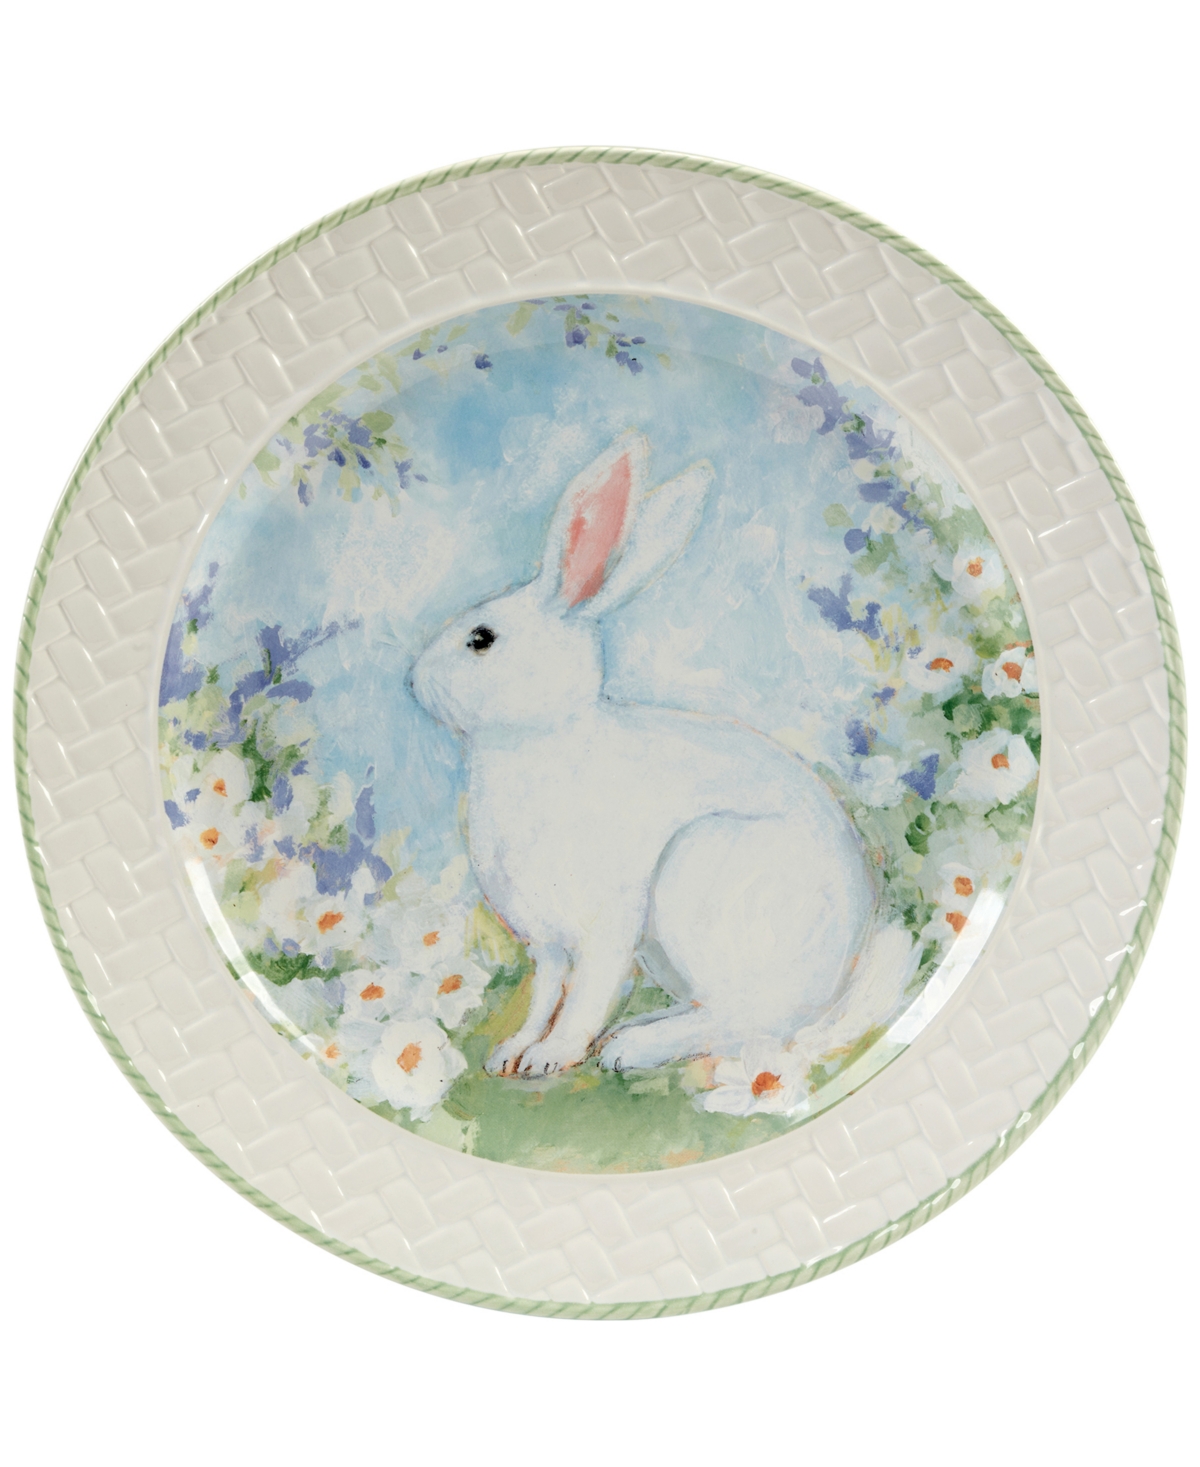 Certified International Easter Morning Round Platter In Blue